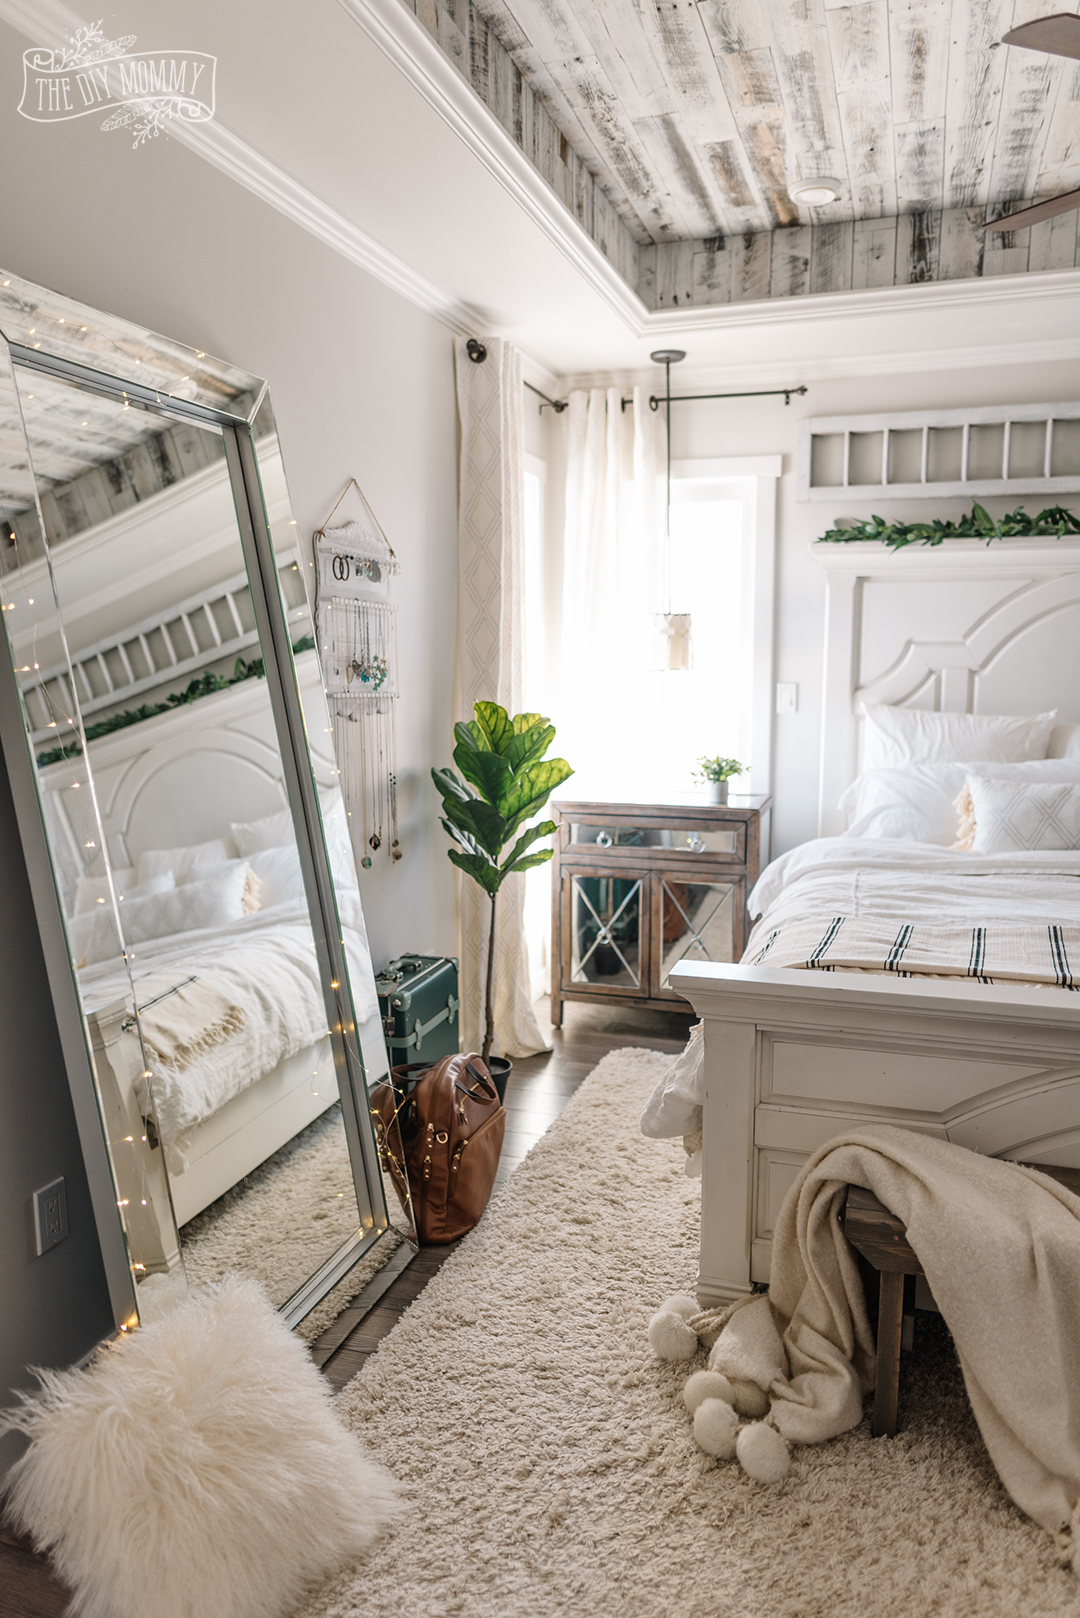 Boho farmhouse master bedroom decor ideas on a budget